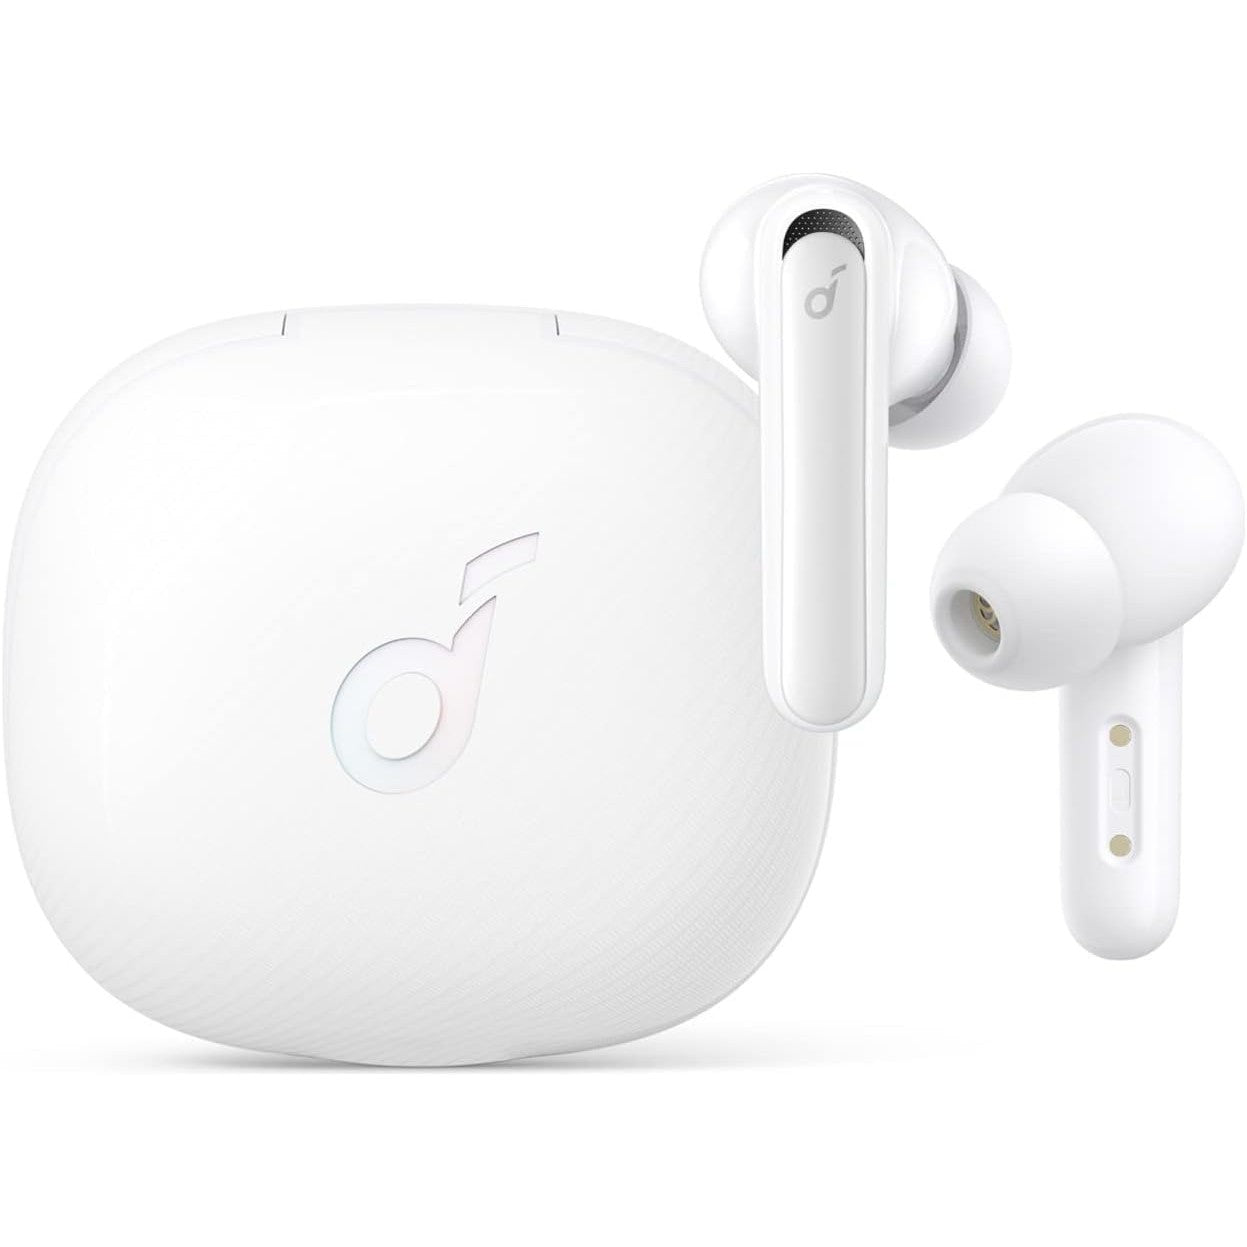 Anker Life Note 3 Wireless Headphones - White - New